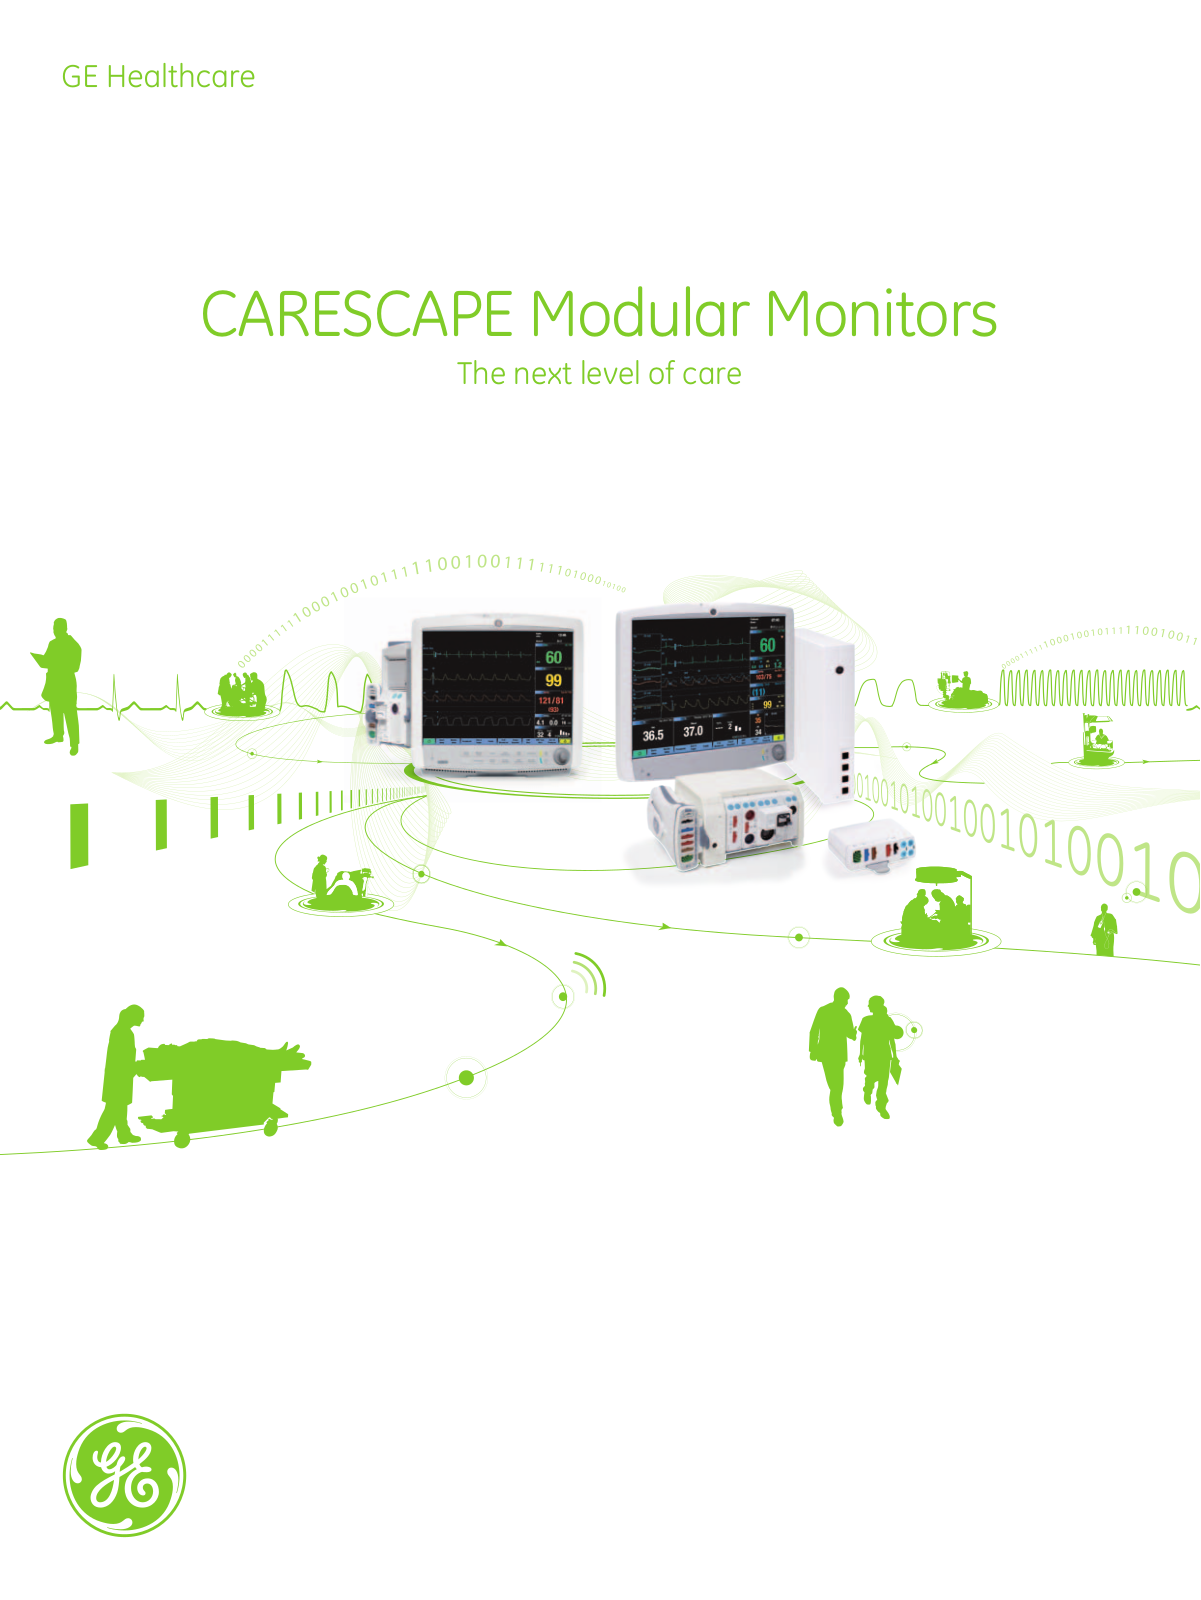 GE Healthcare CARESCAPE Modular Monitors Brochure